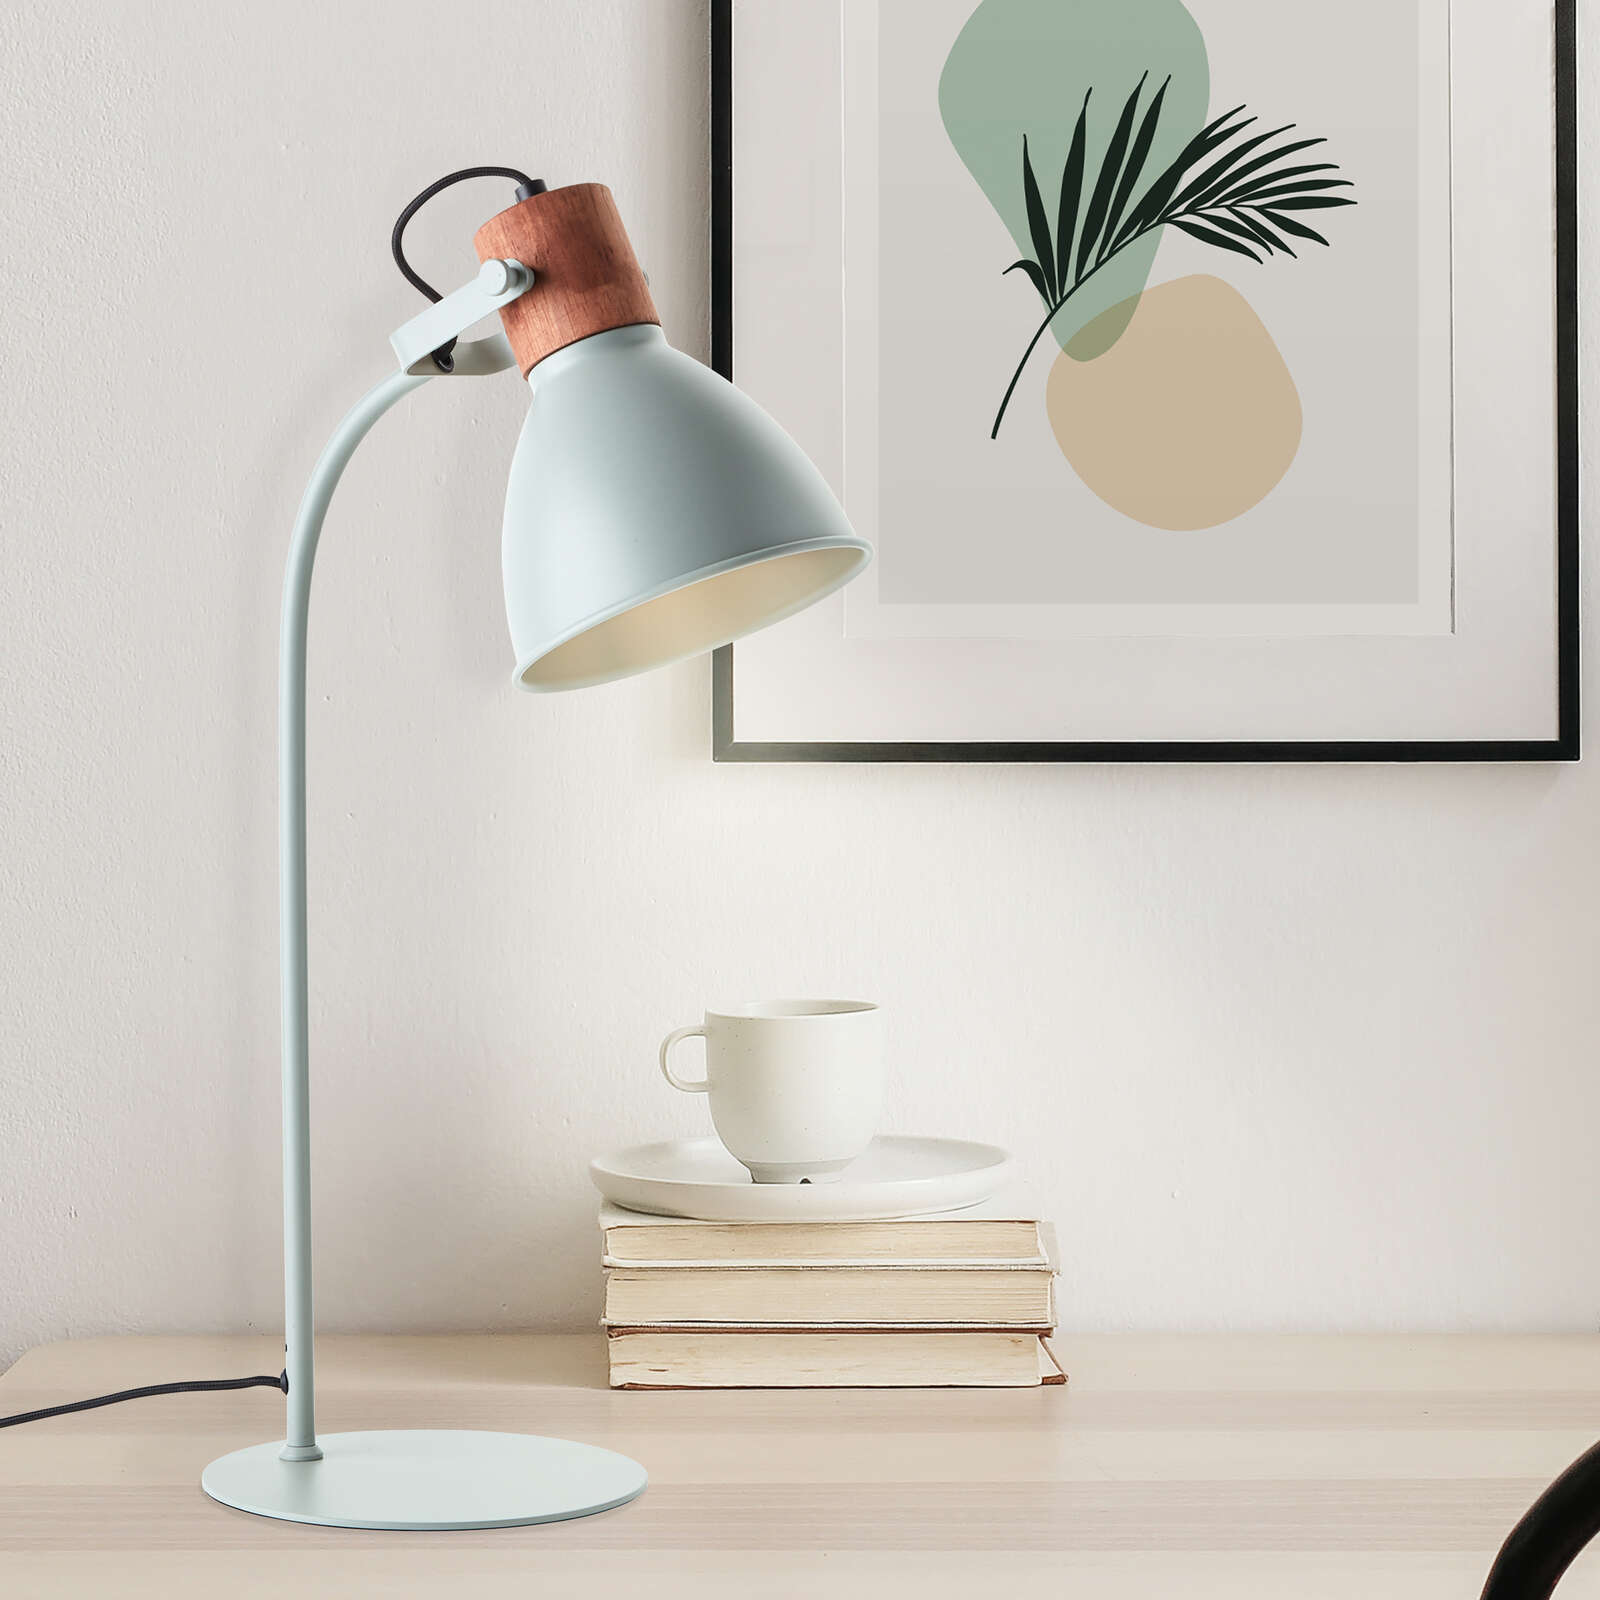             Wooden table lamp - Franziska 4 - Green
        